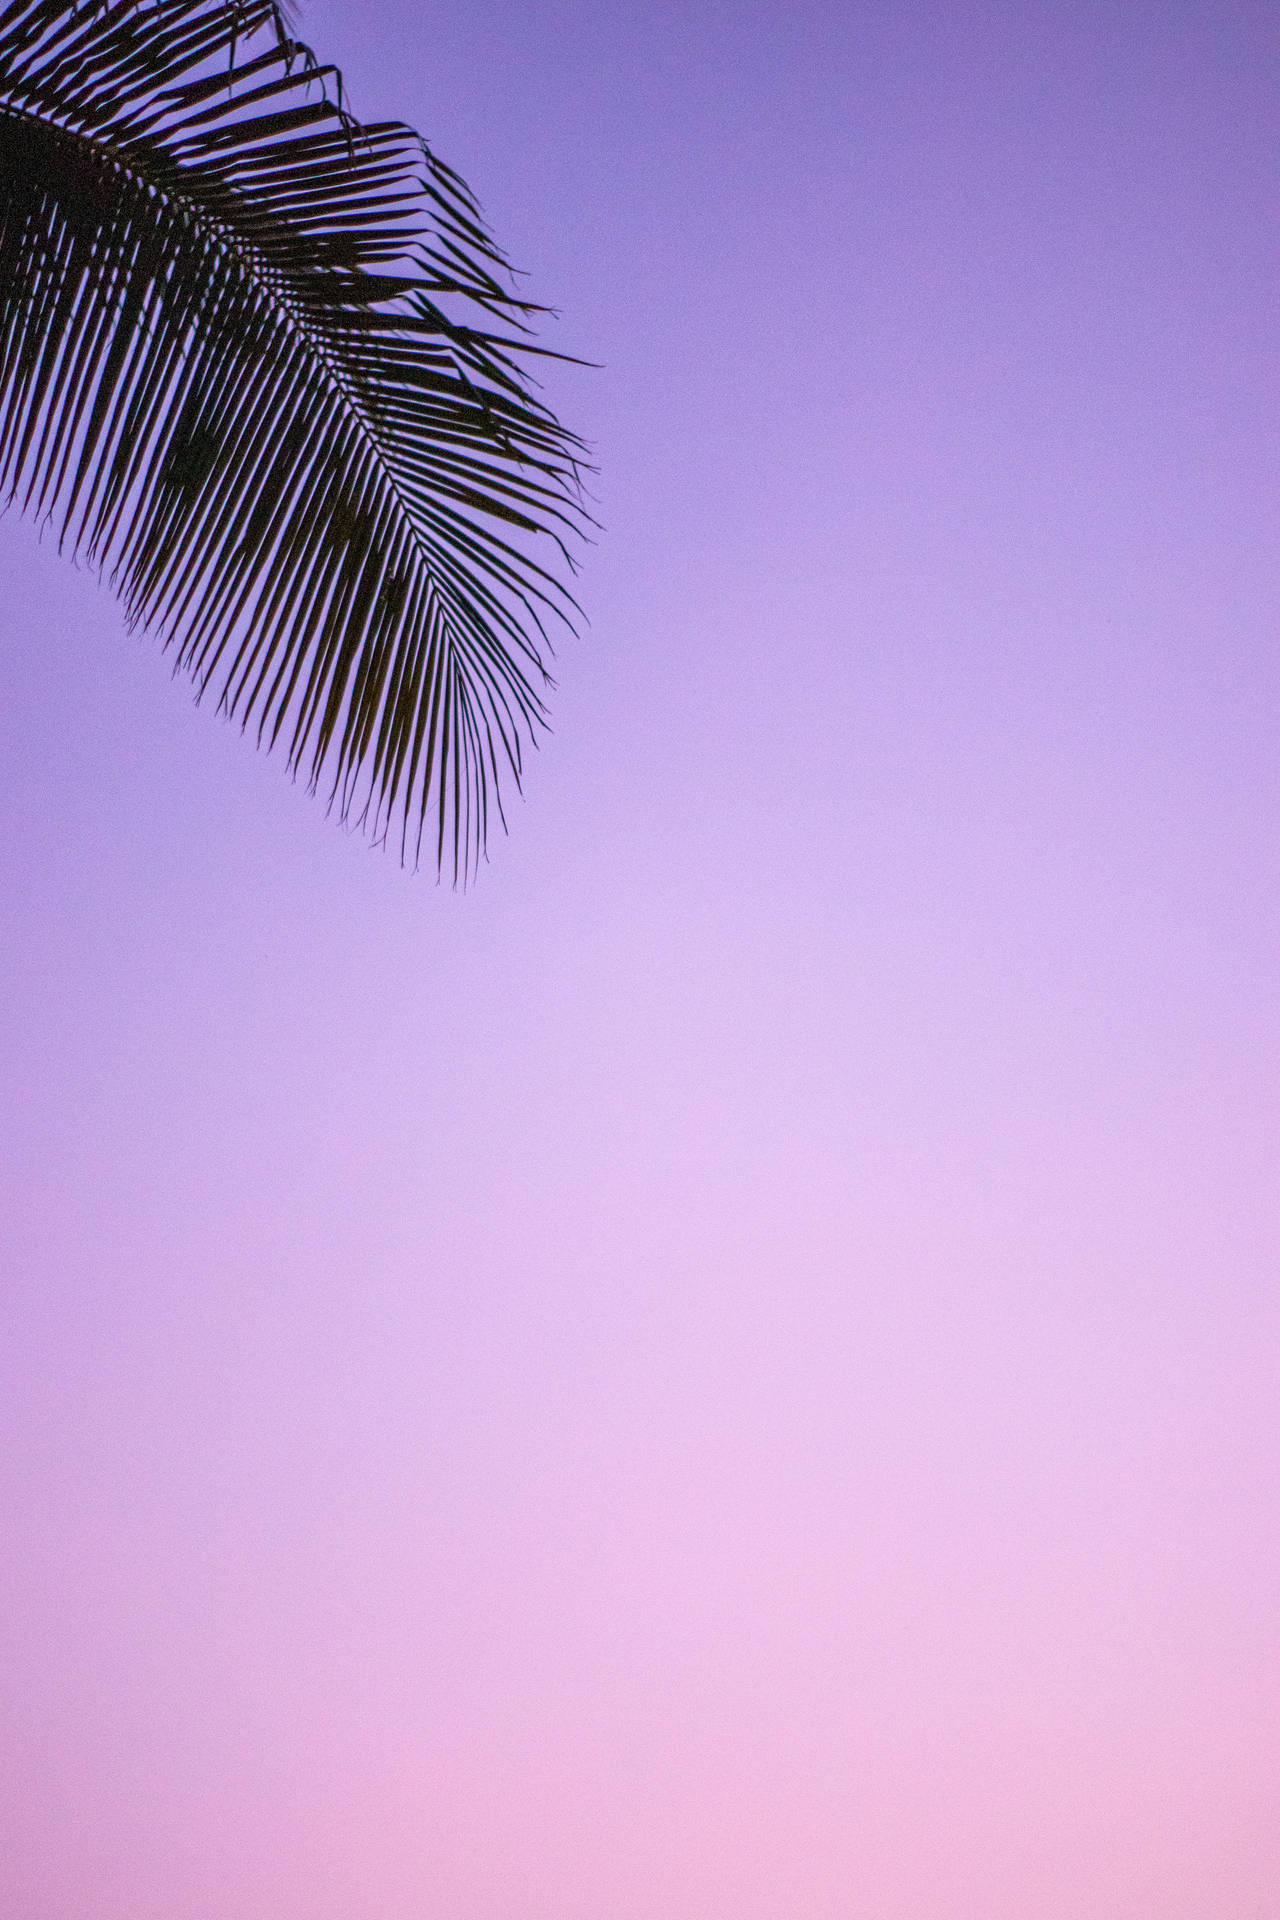 Coolest Iphone Gradient Purple Background